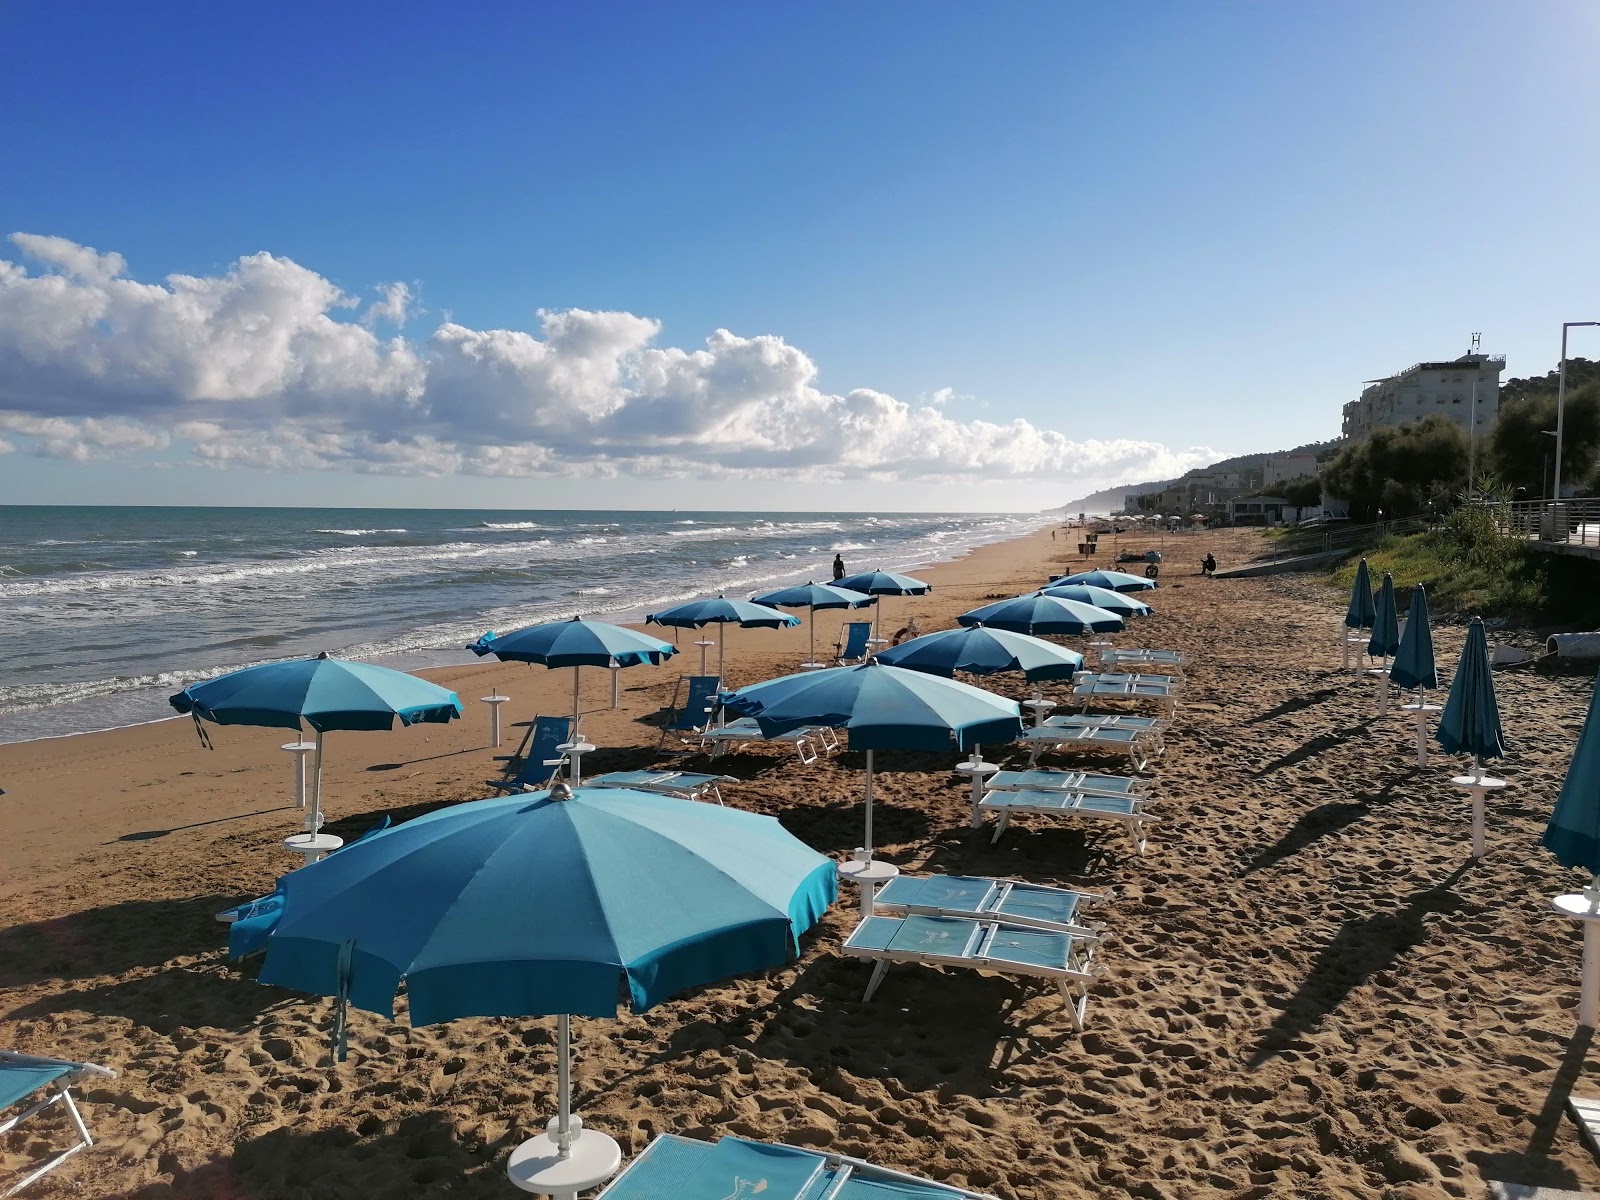 Foto af Spiaggia di San Menaio med turkis rent vand overflade